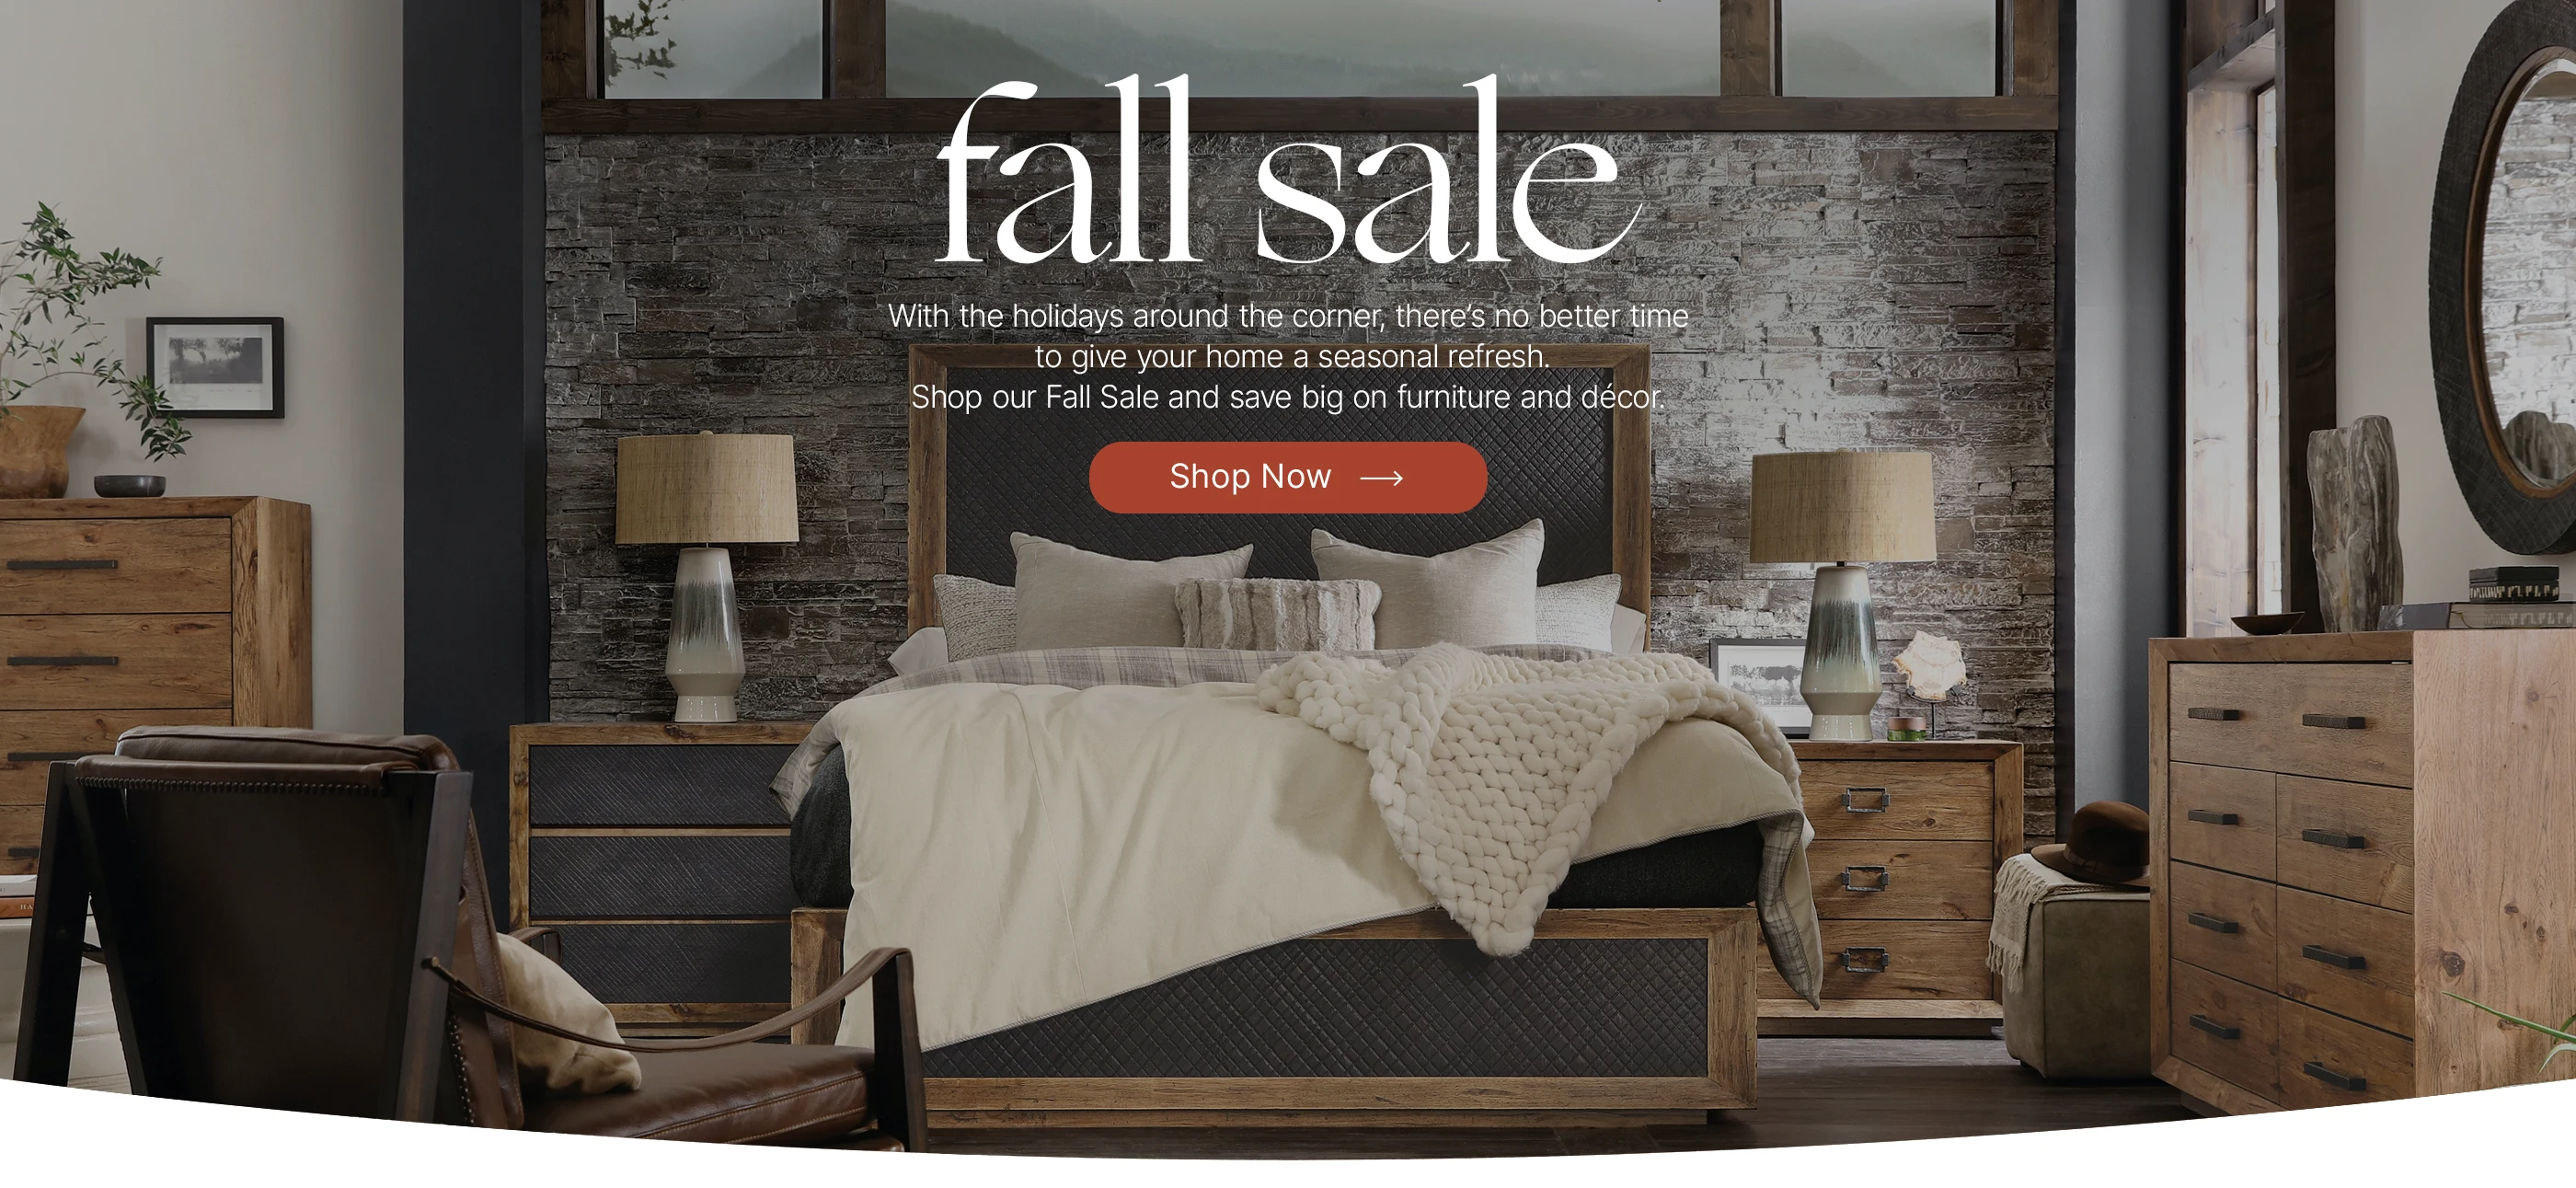 Homethreads Fall Sale